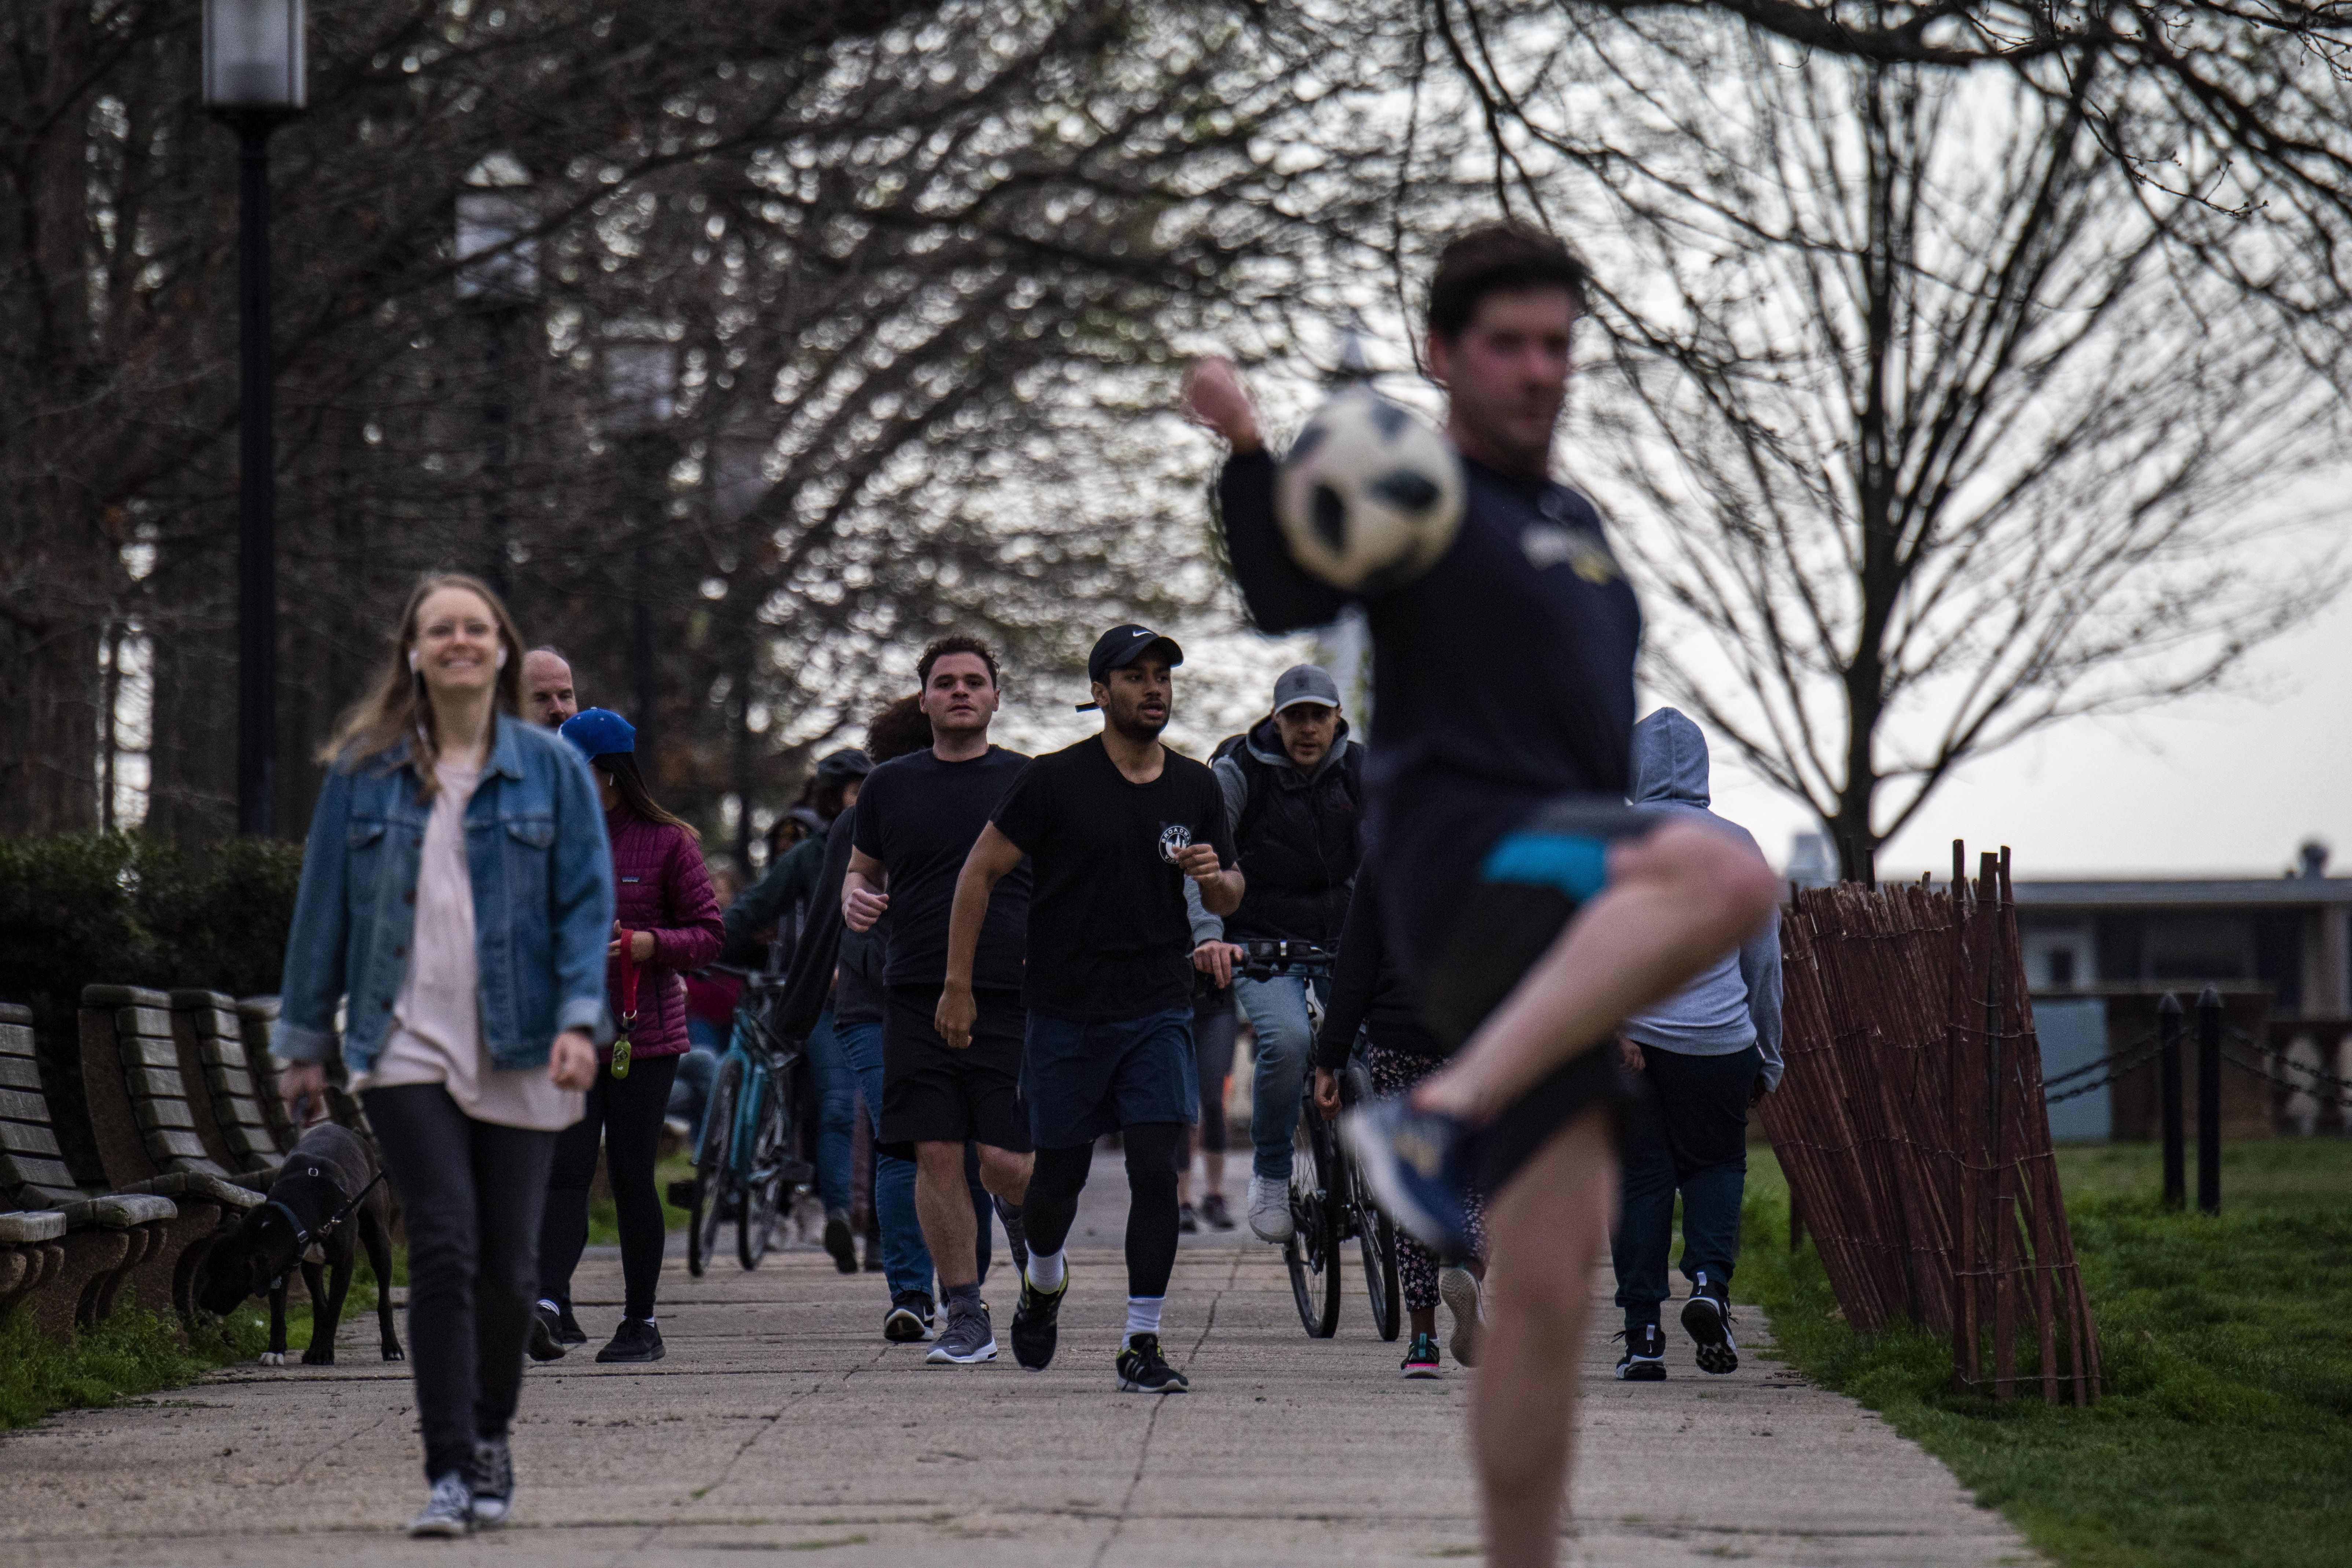 People walk and jog, and a man kicks a soccer ball, on a crowded path.